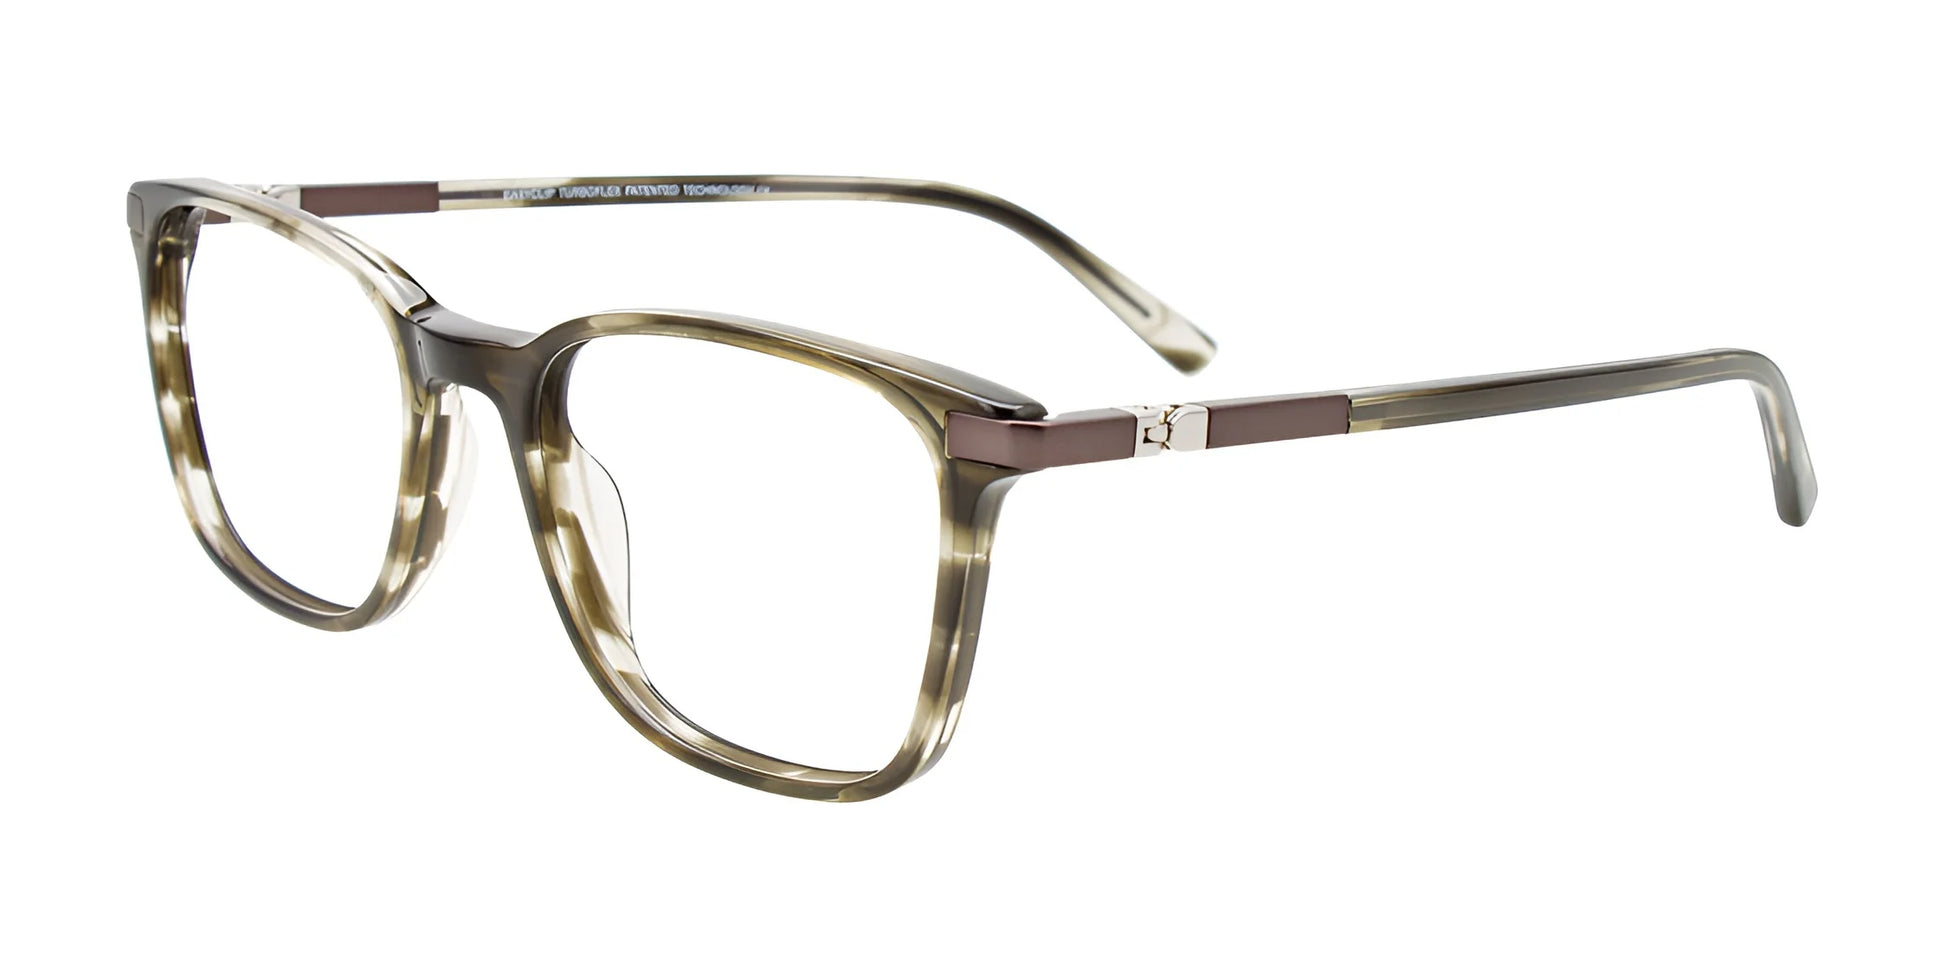 EasyClip EC664 Eyeglasses Transparent Marble Grey